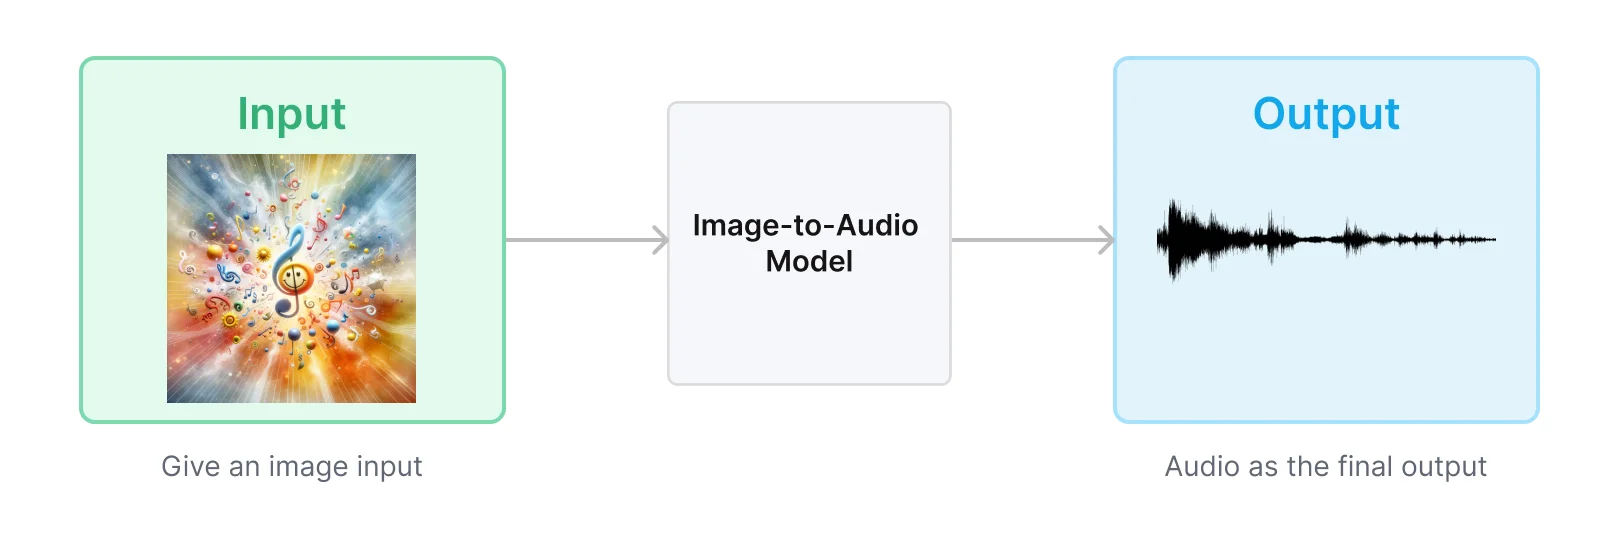 image to audio model example